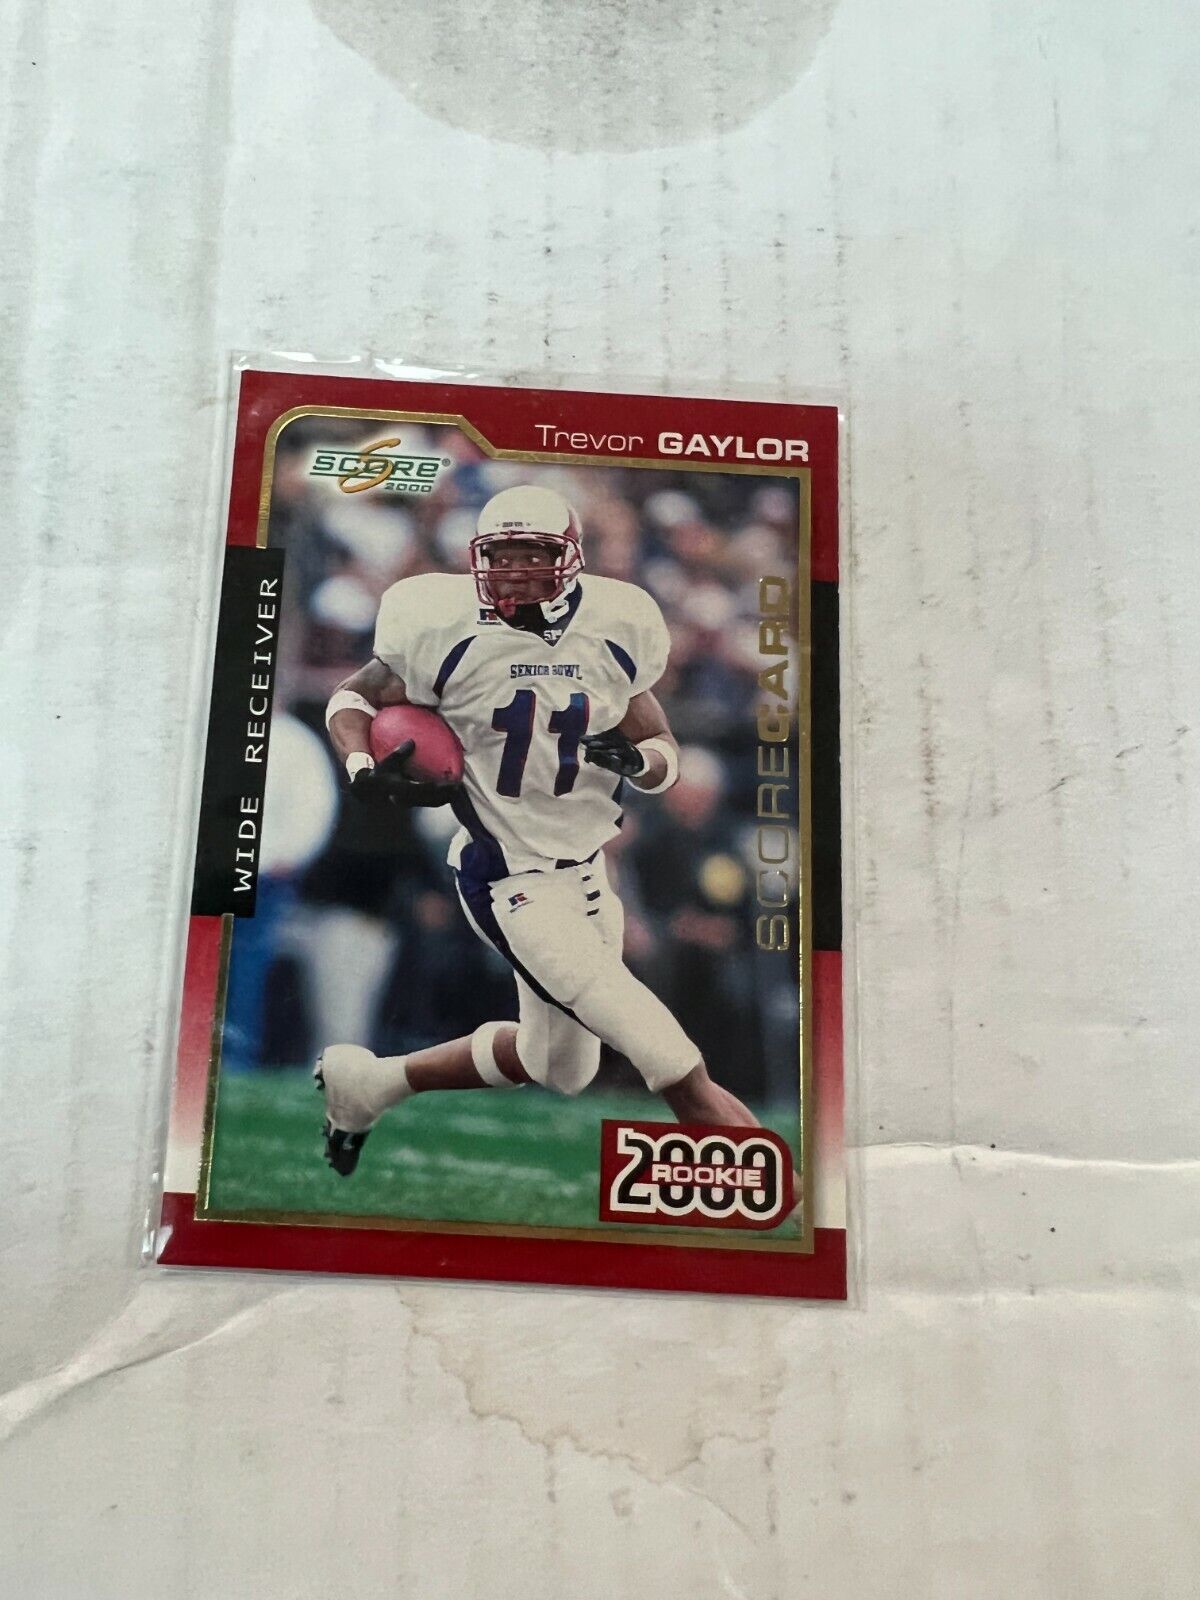 Trevor Gaylor 2000 Scorecard Rookie Card #323 Serial #0125/2000. rookie card picture